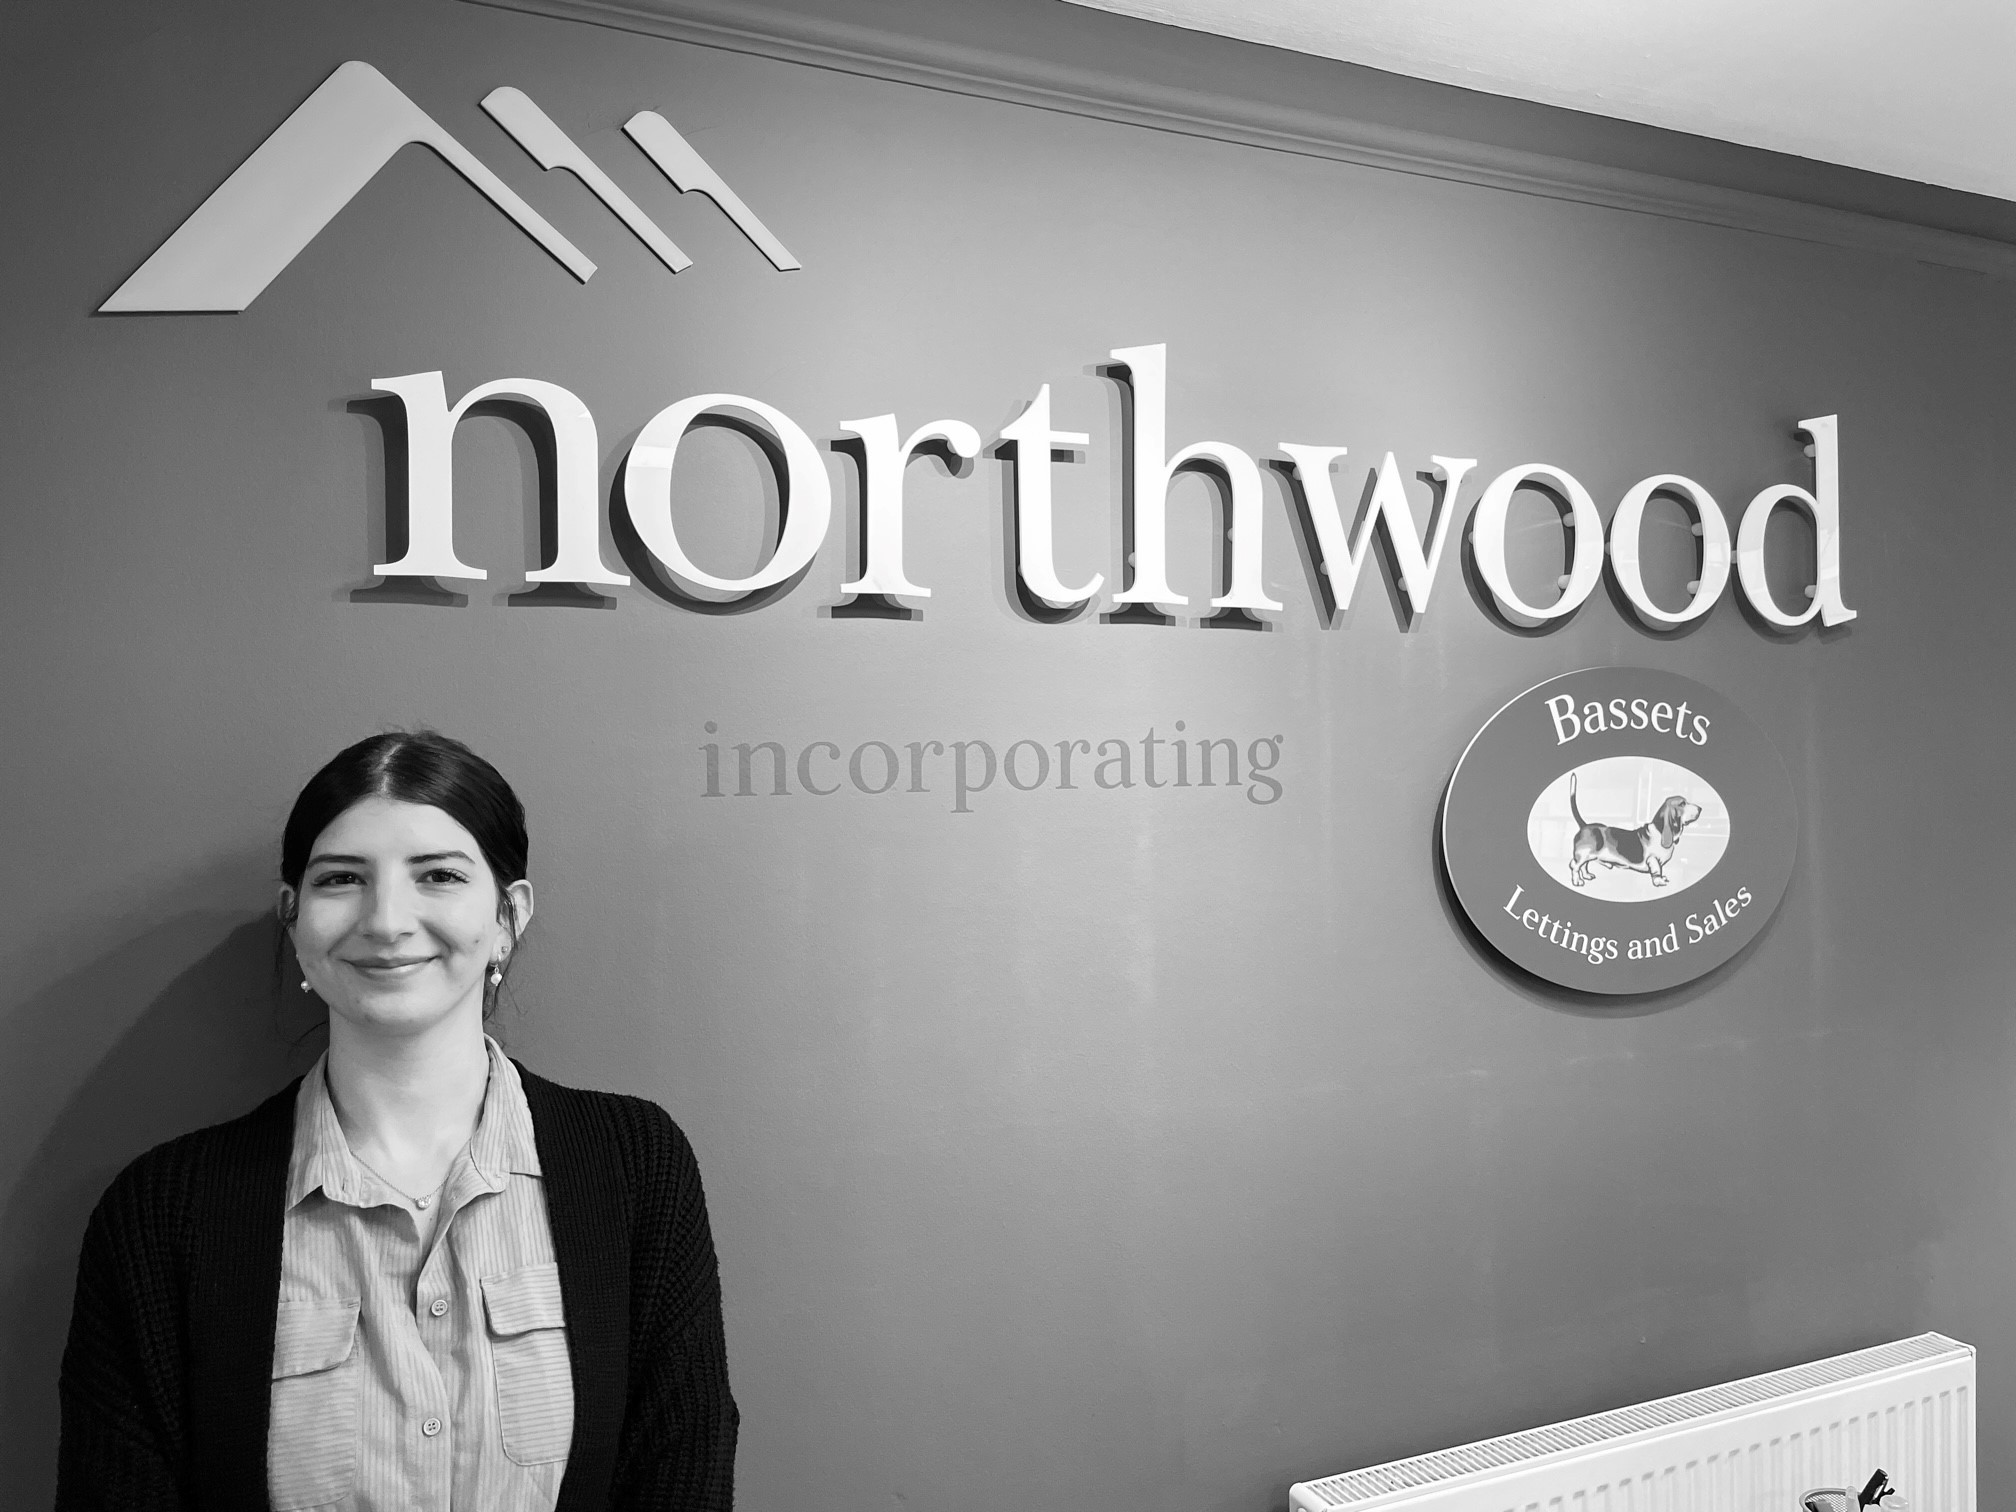 Pari Shamspour Northwood Bassets Estate Agent